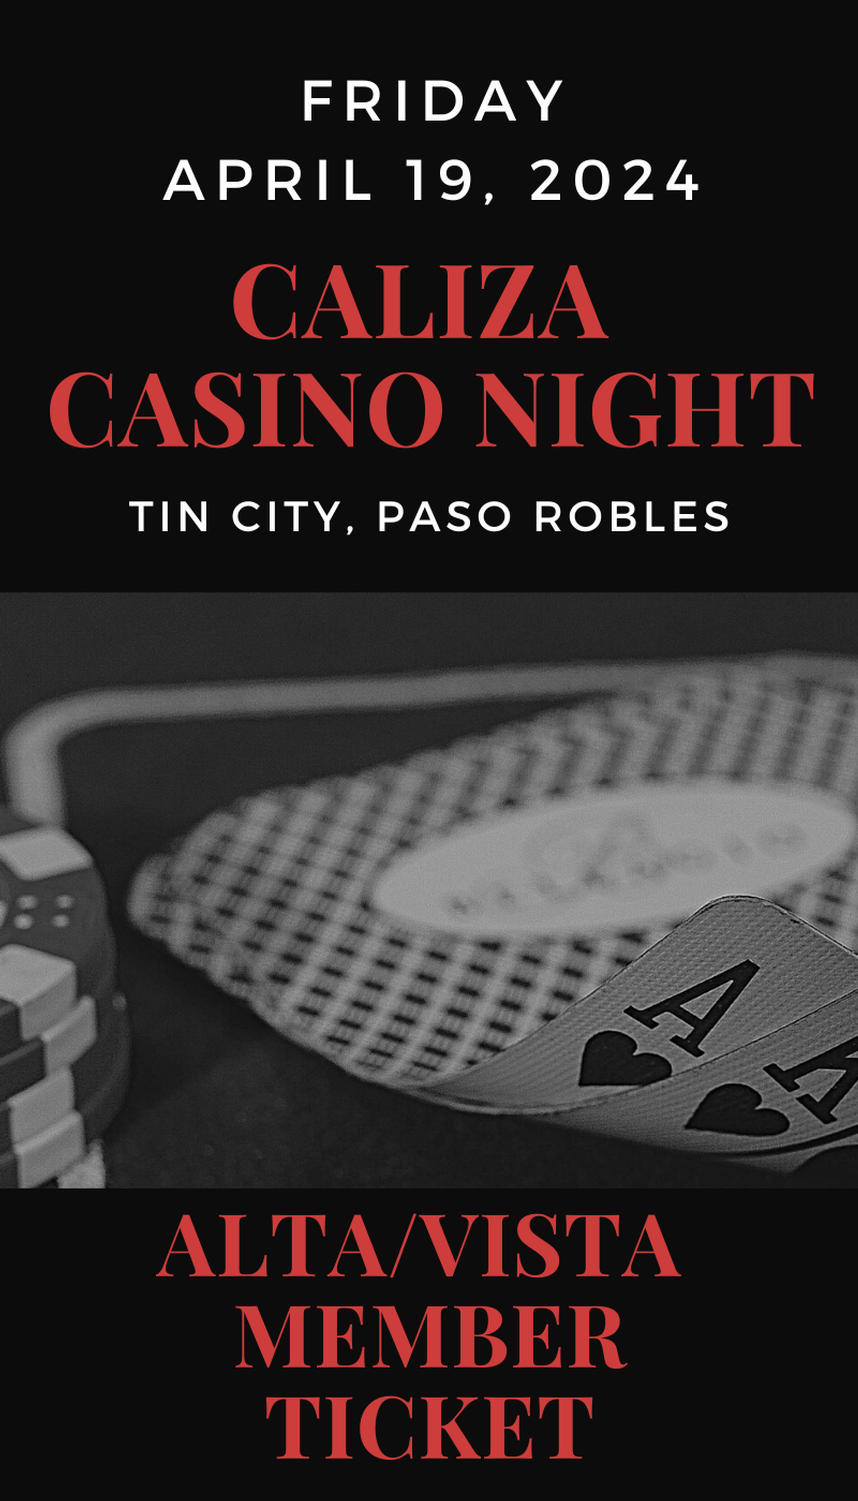 Casino Night - ALTA/VISTA